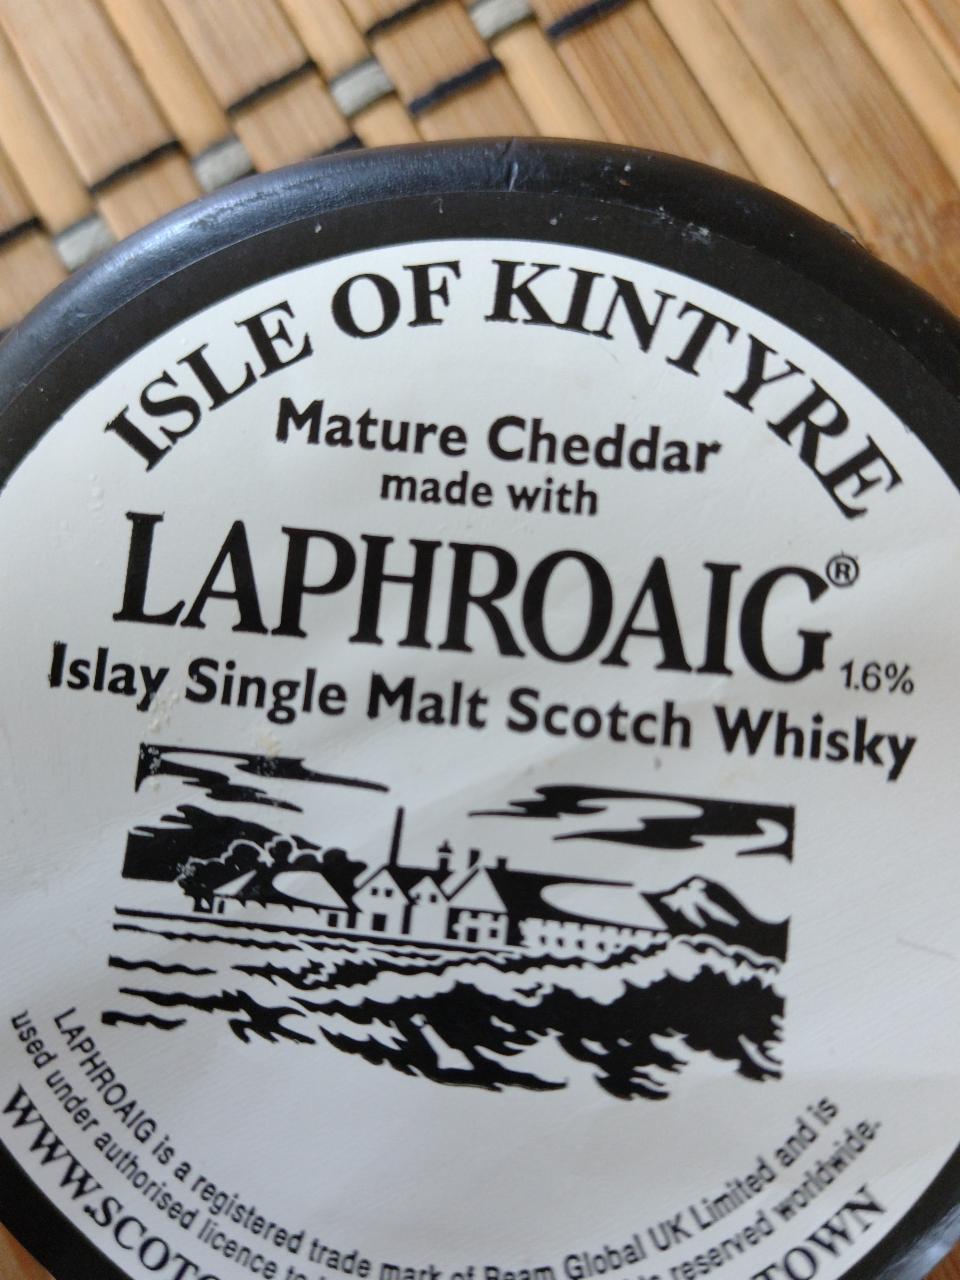 Fotografie - Mature Cheddar made with Laphroaig Islay Single Malt Scotch Whisky Isle Of Kintyre